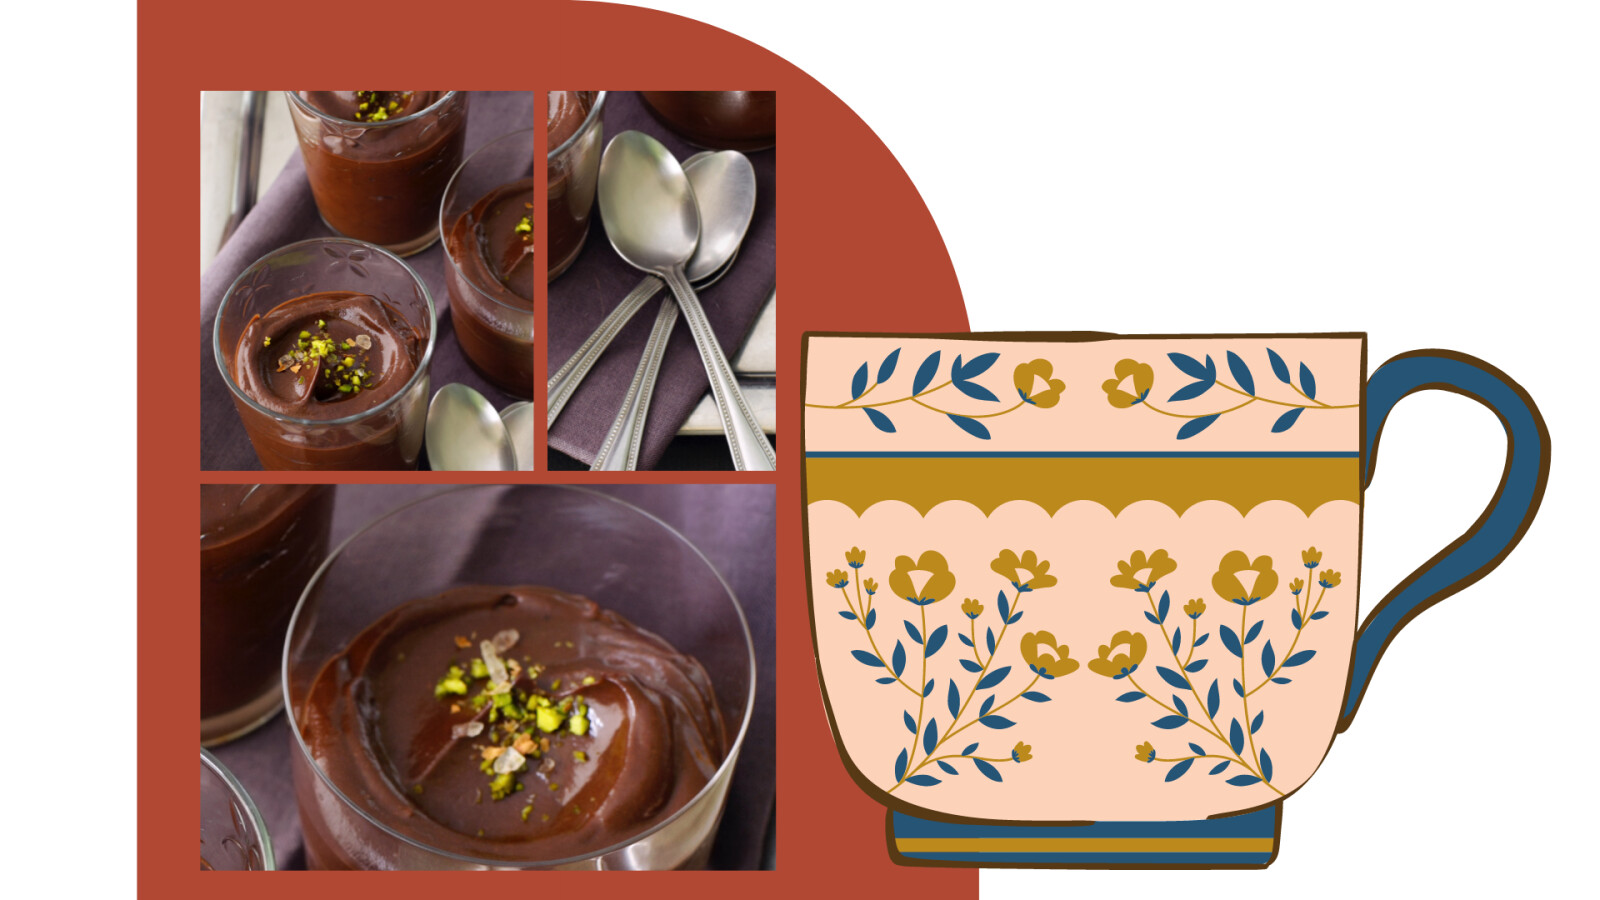 Magic Magnesium + A Chocolate Pudding recipe for the whole family!